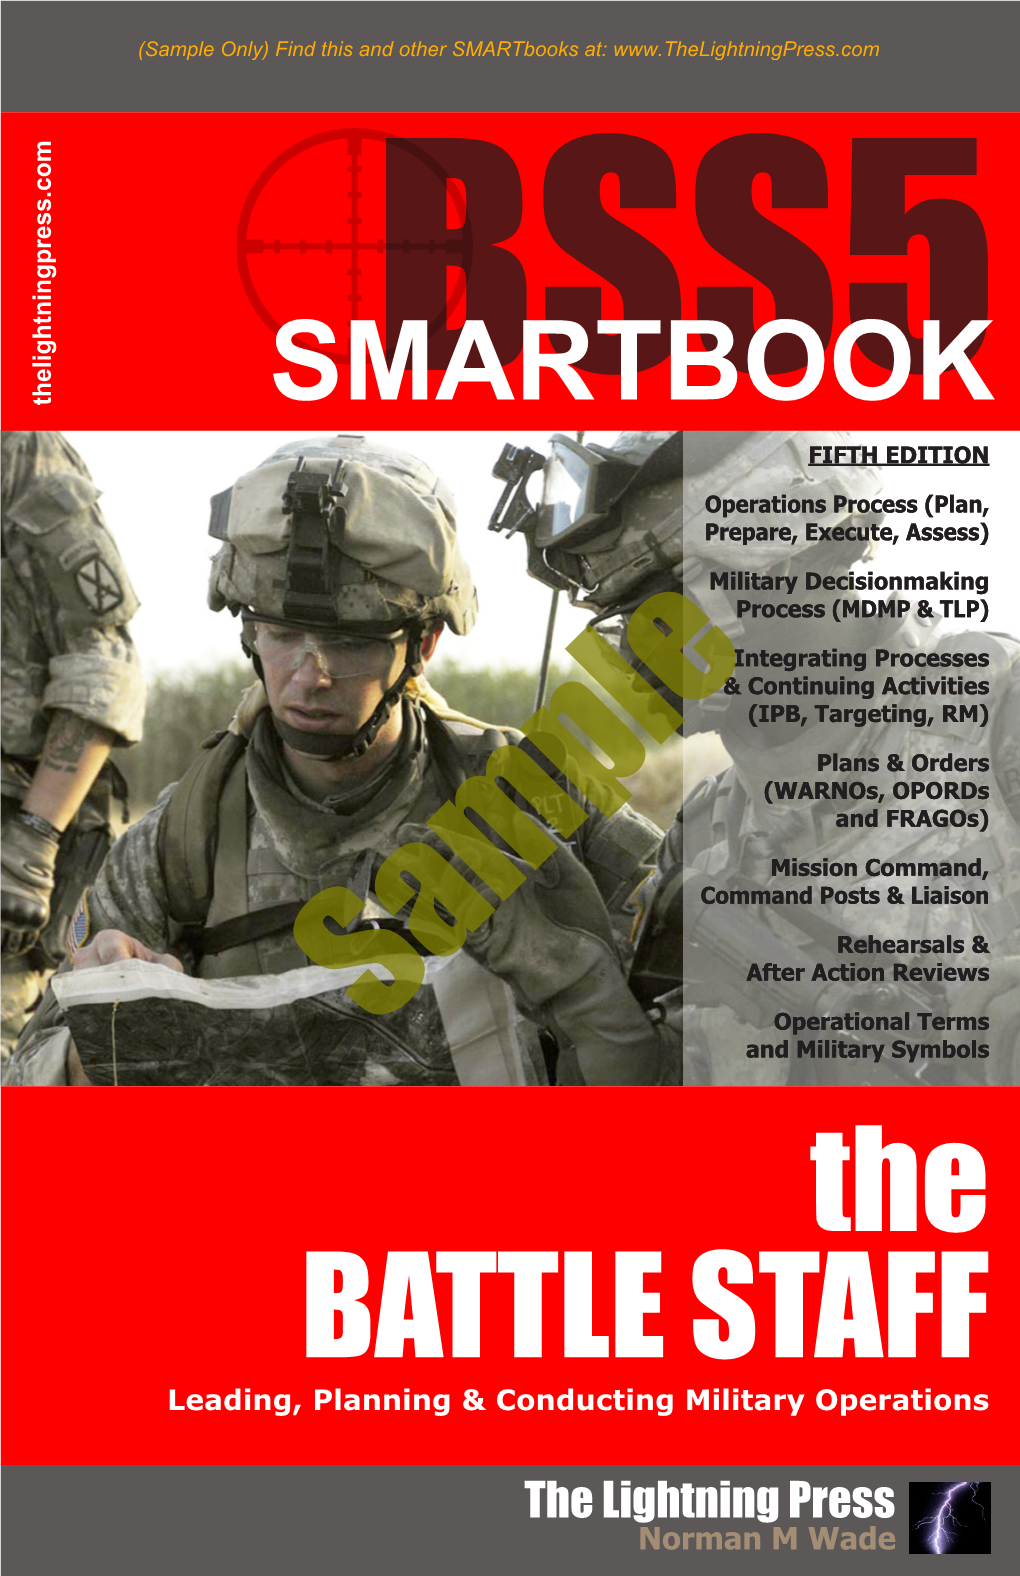 BSS5: the Battle Staff Smartbook, 5Th